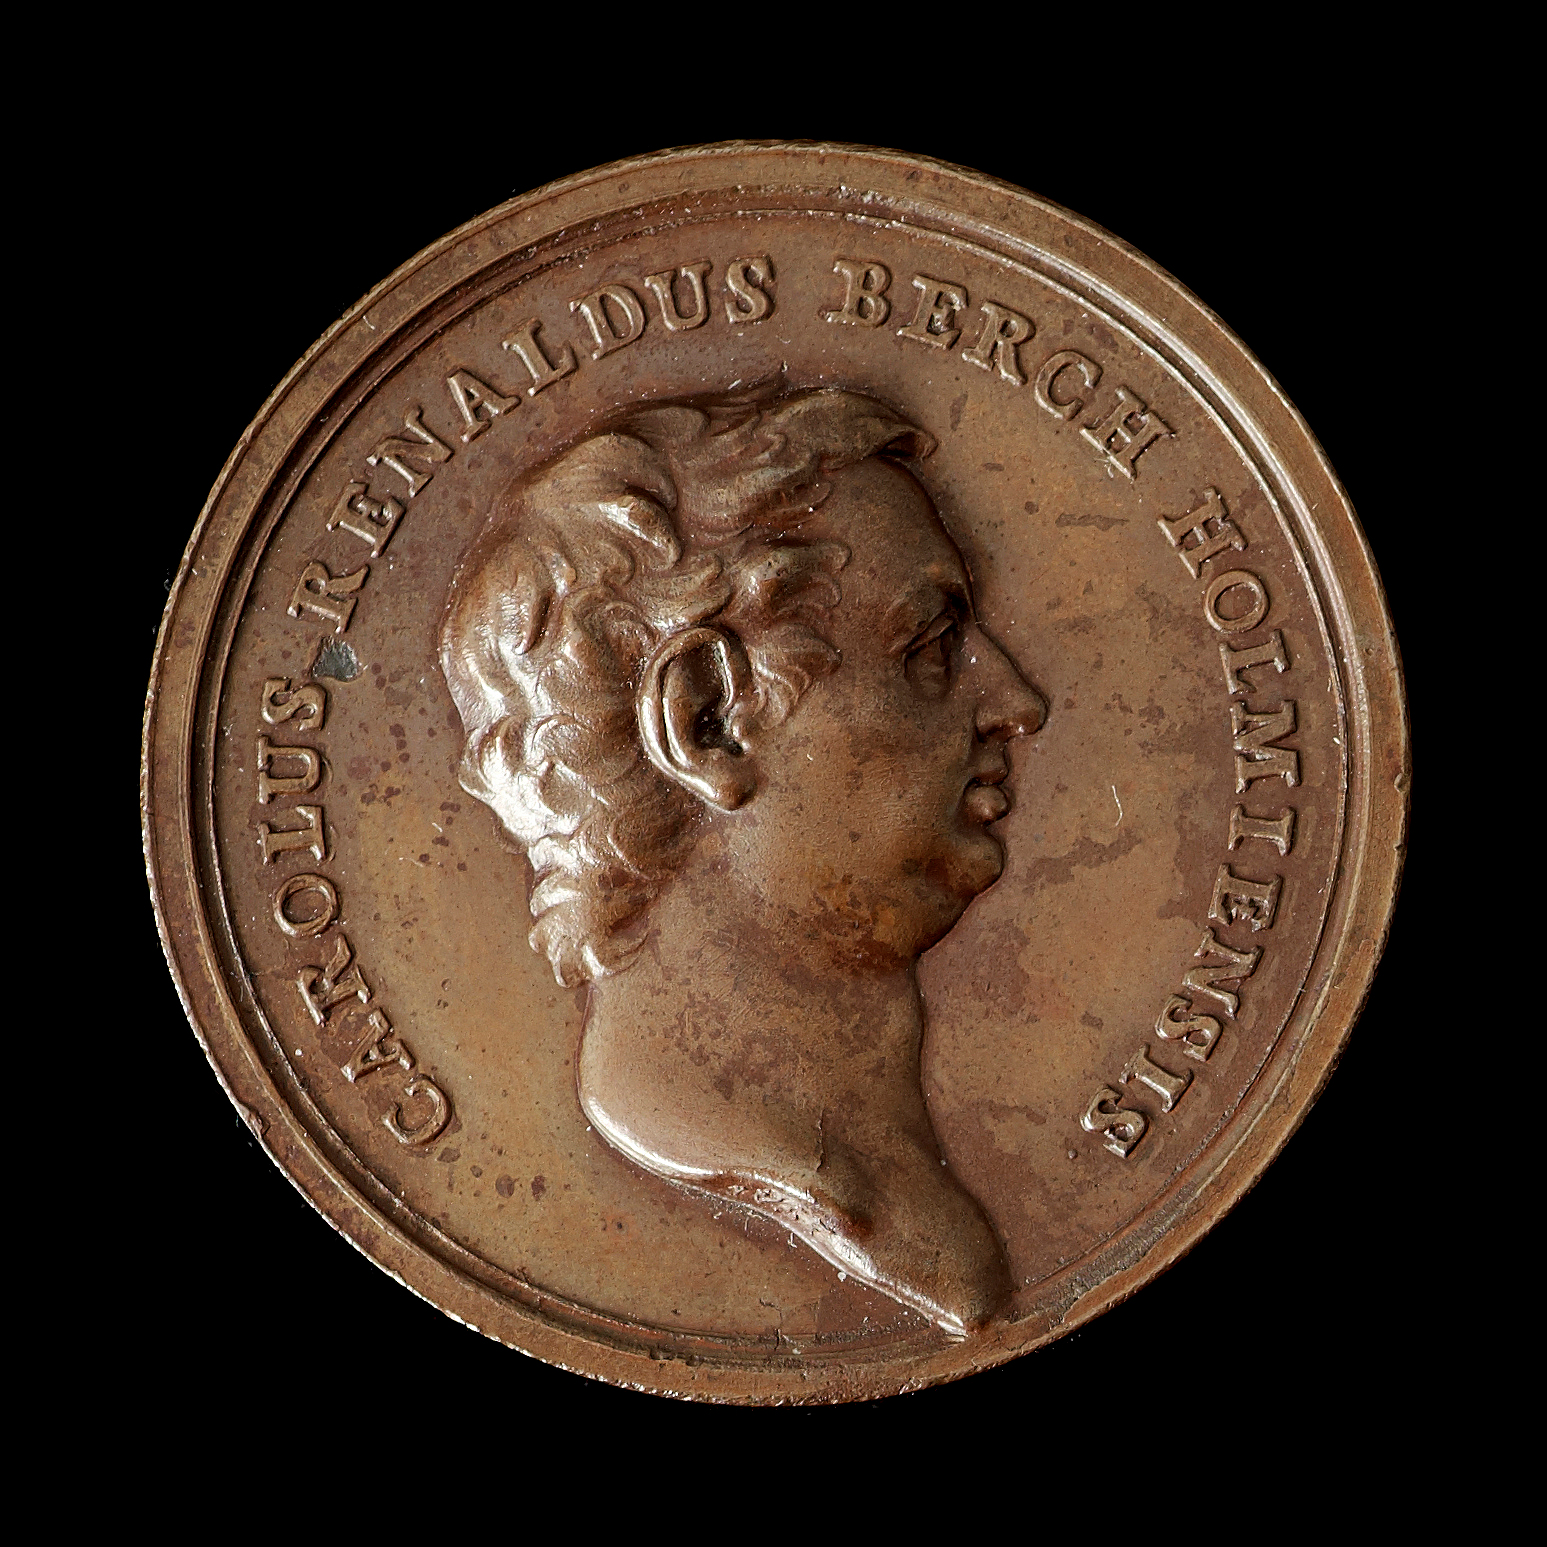 File:Berch, Carl Reinhold medal.jpg